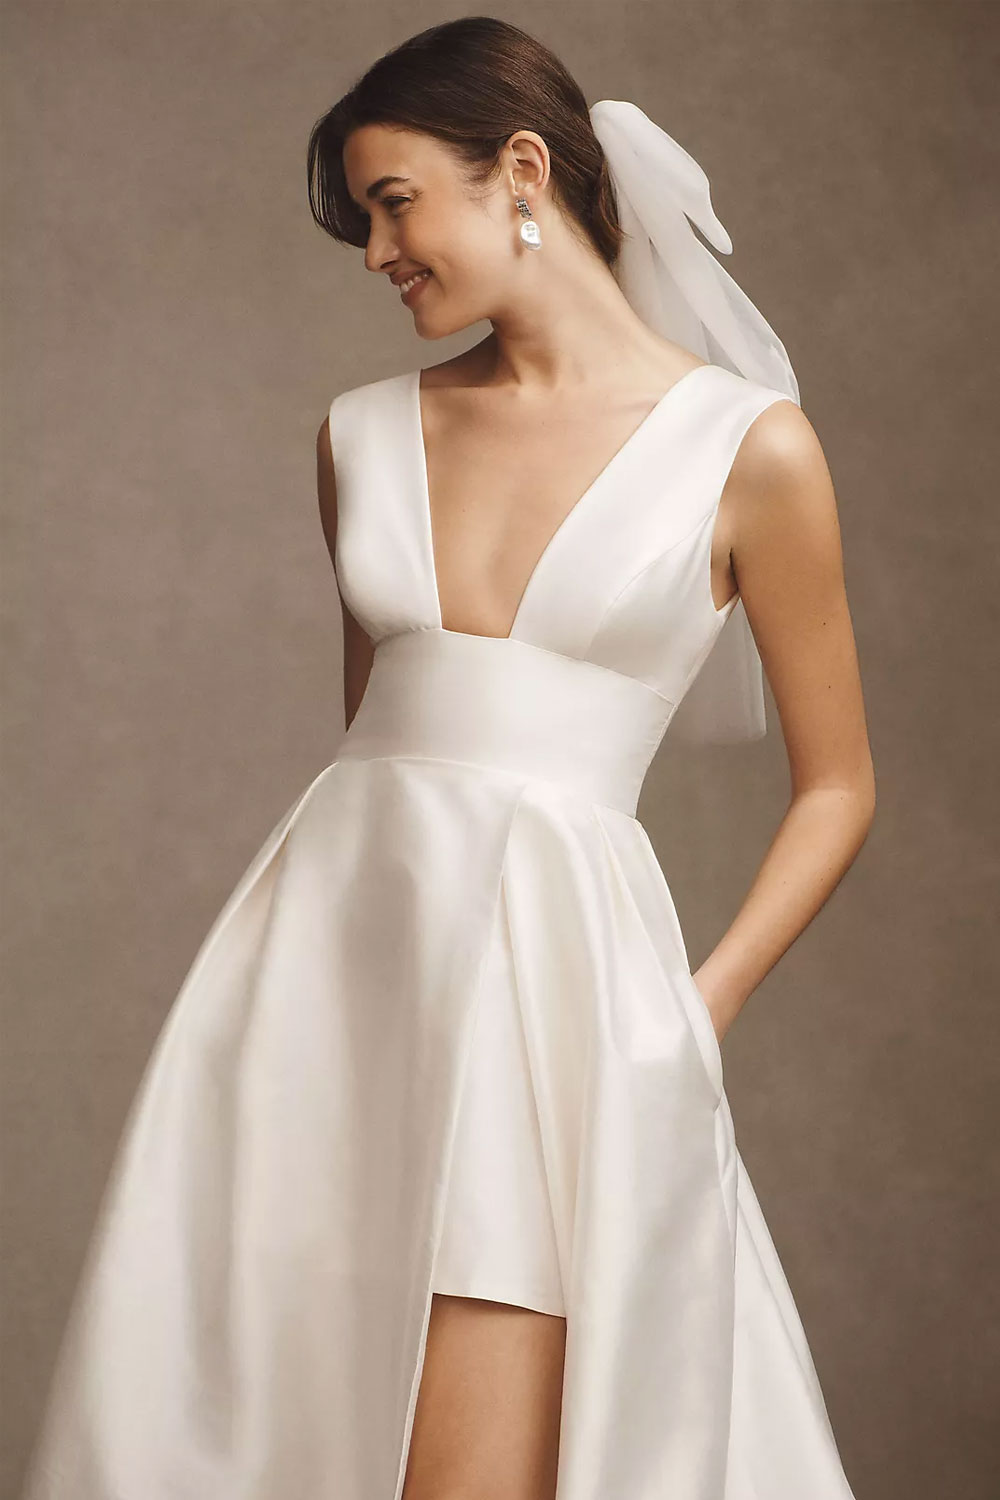 where to buy romantic wedding dresses online